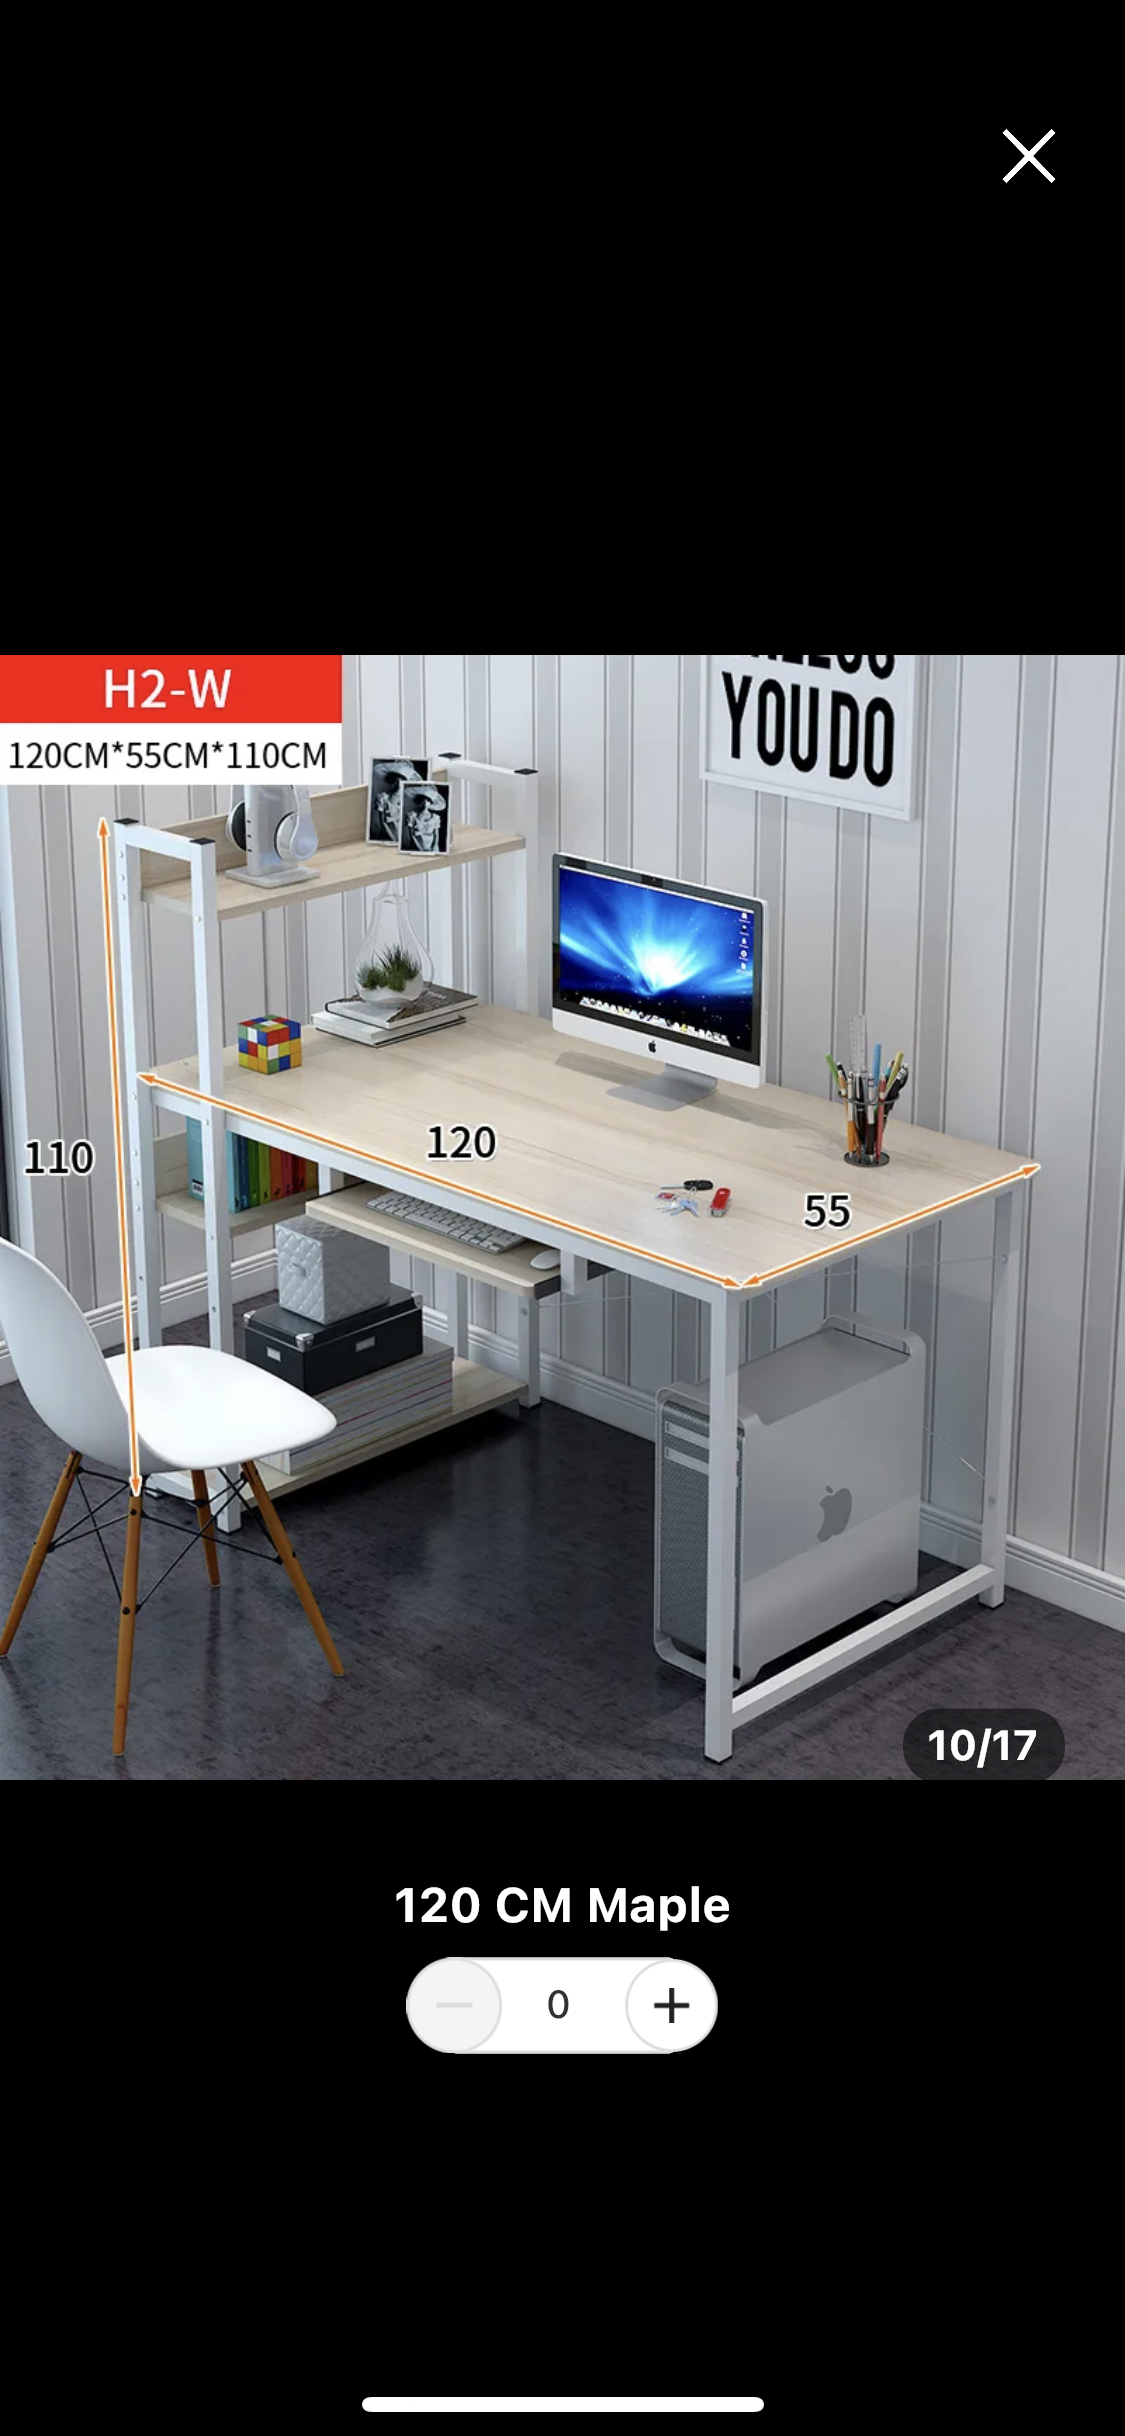 STĒDE Study Desk with 4 layer storage shelf without keyboard insert, 120 cm